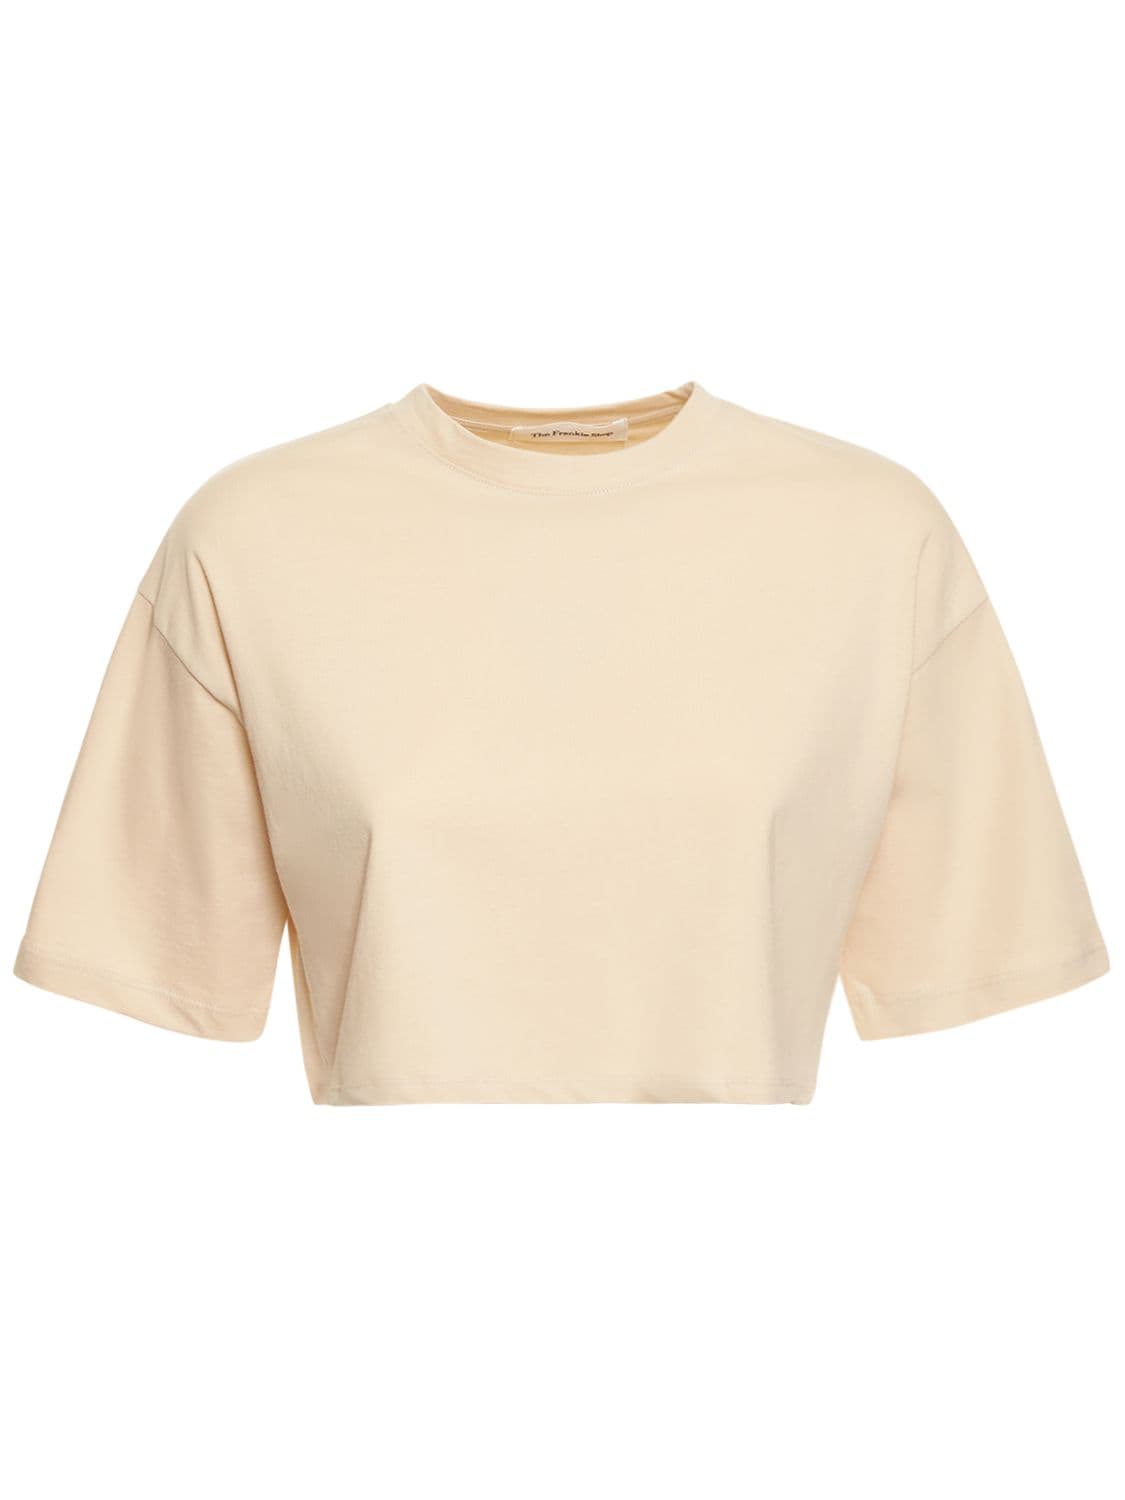 THE FRANKIE SHOP Karina Cropped Cotton Jersey T-shirt